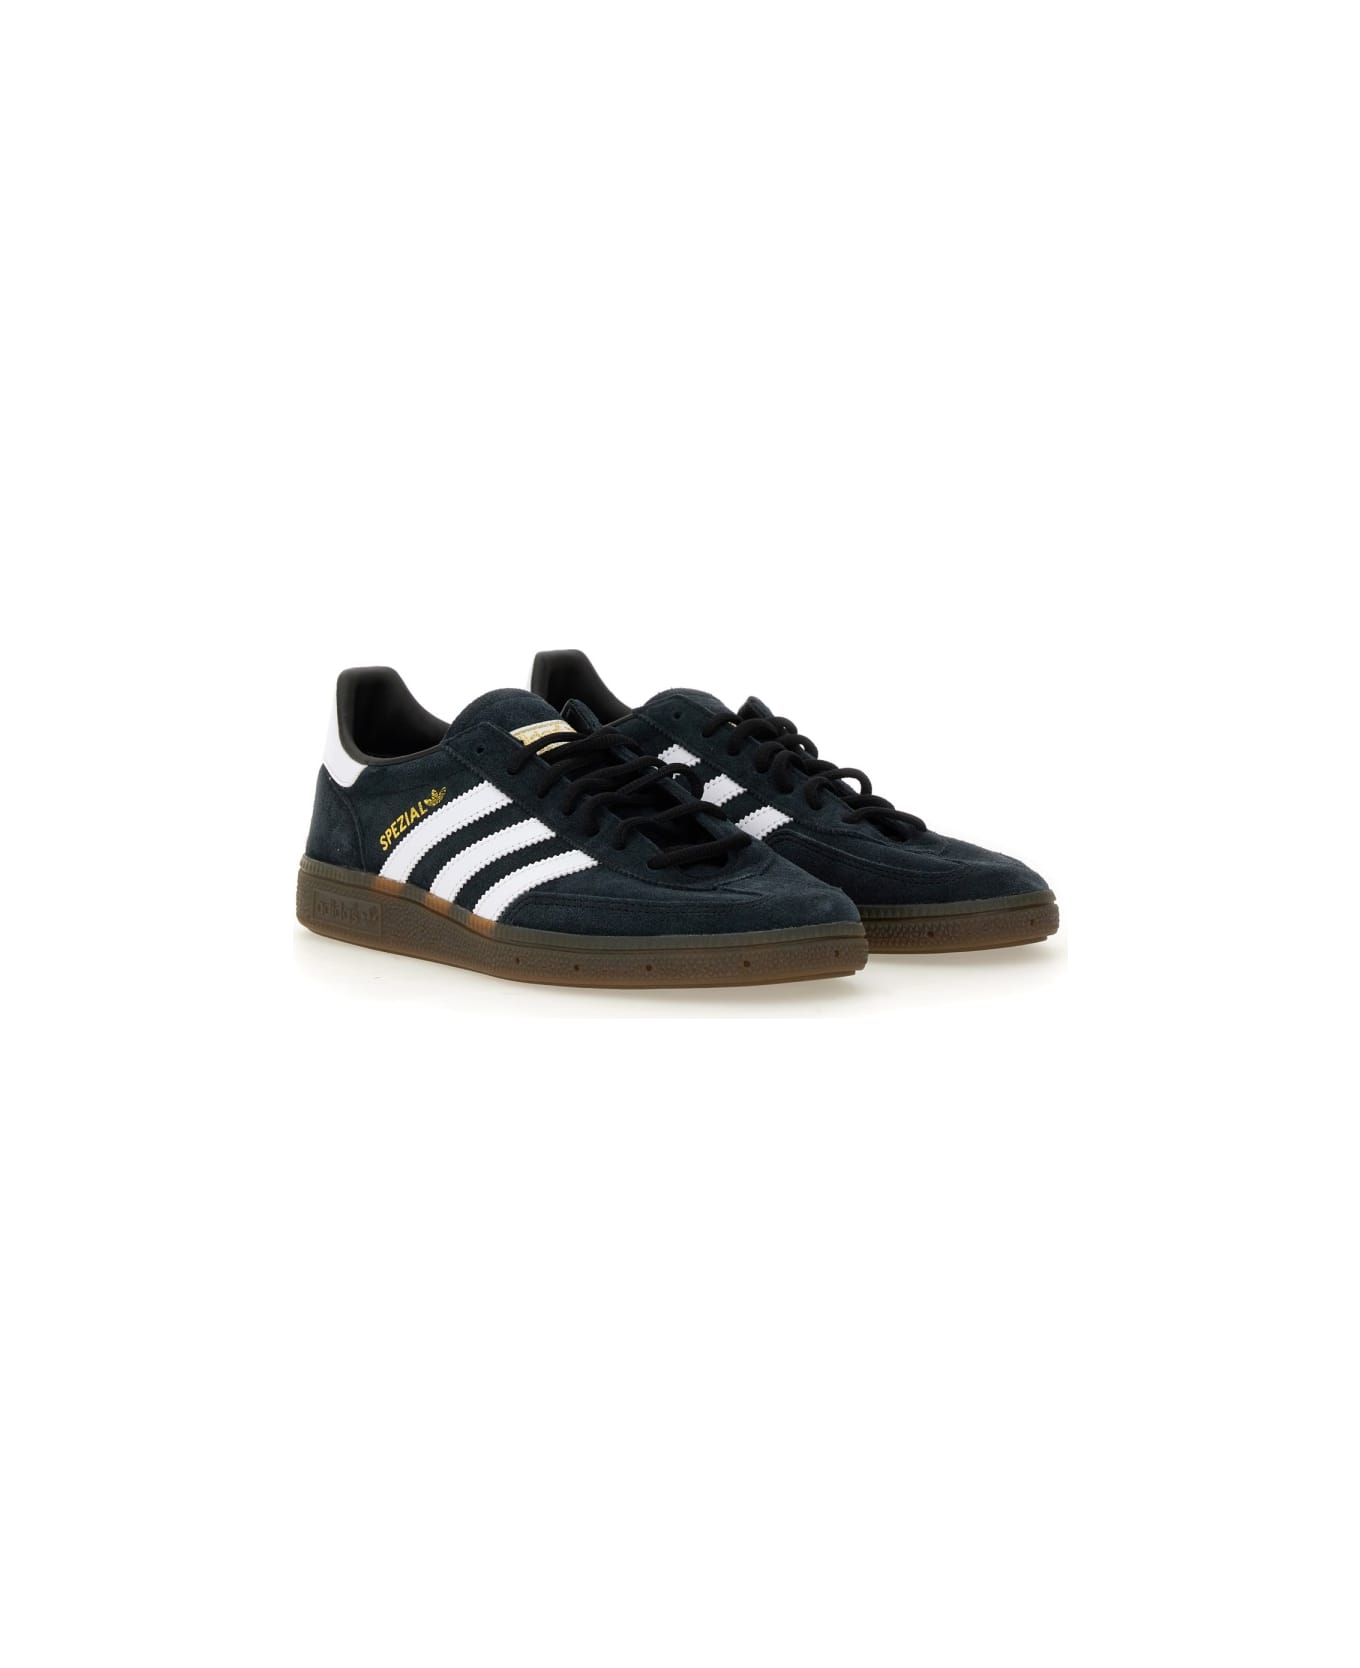 Adidas Originals Handball Spezial Sneakers - BLACK